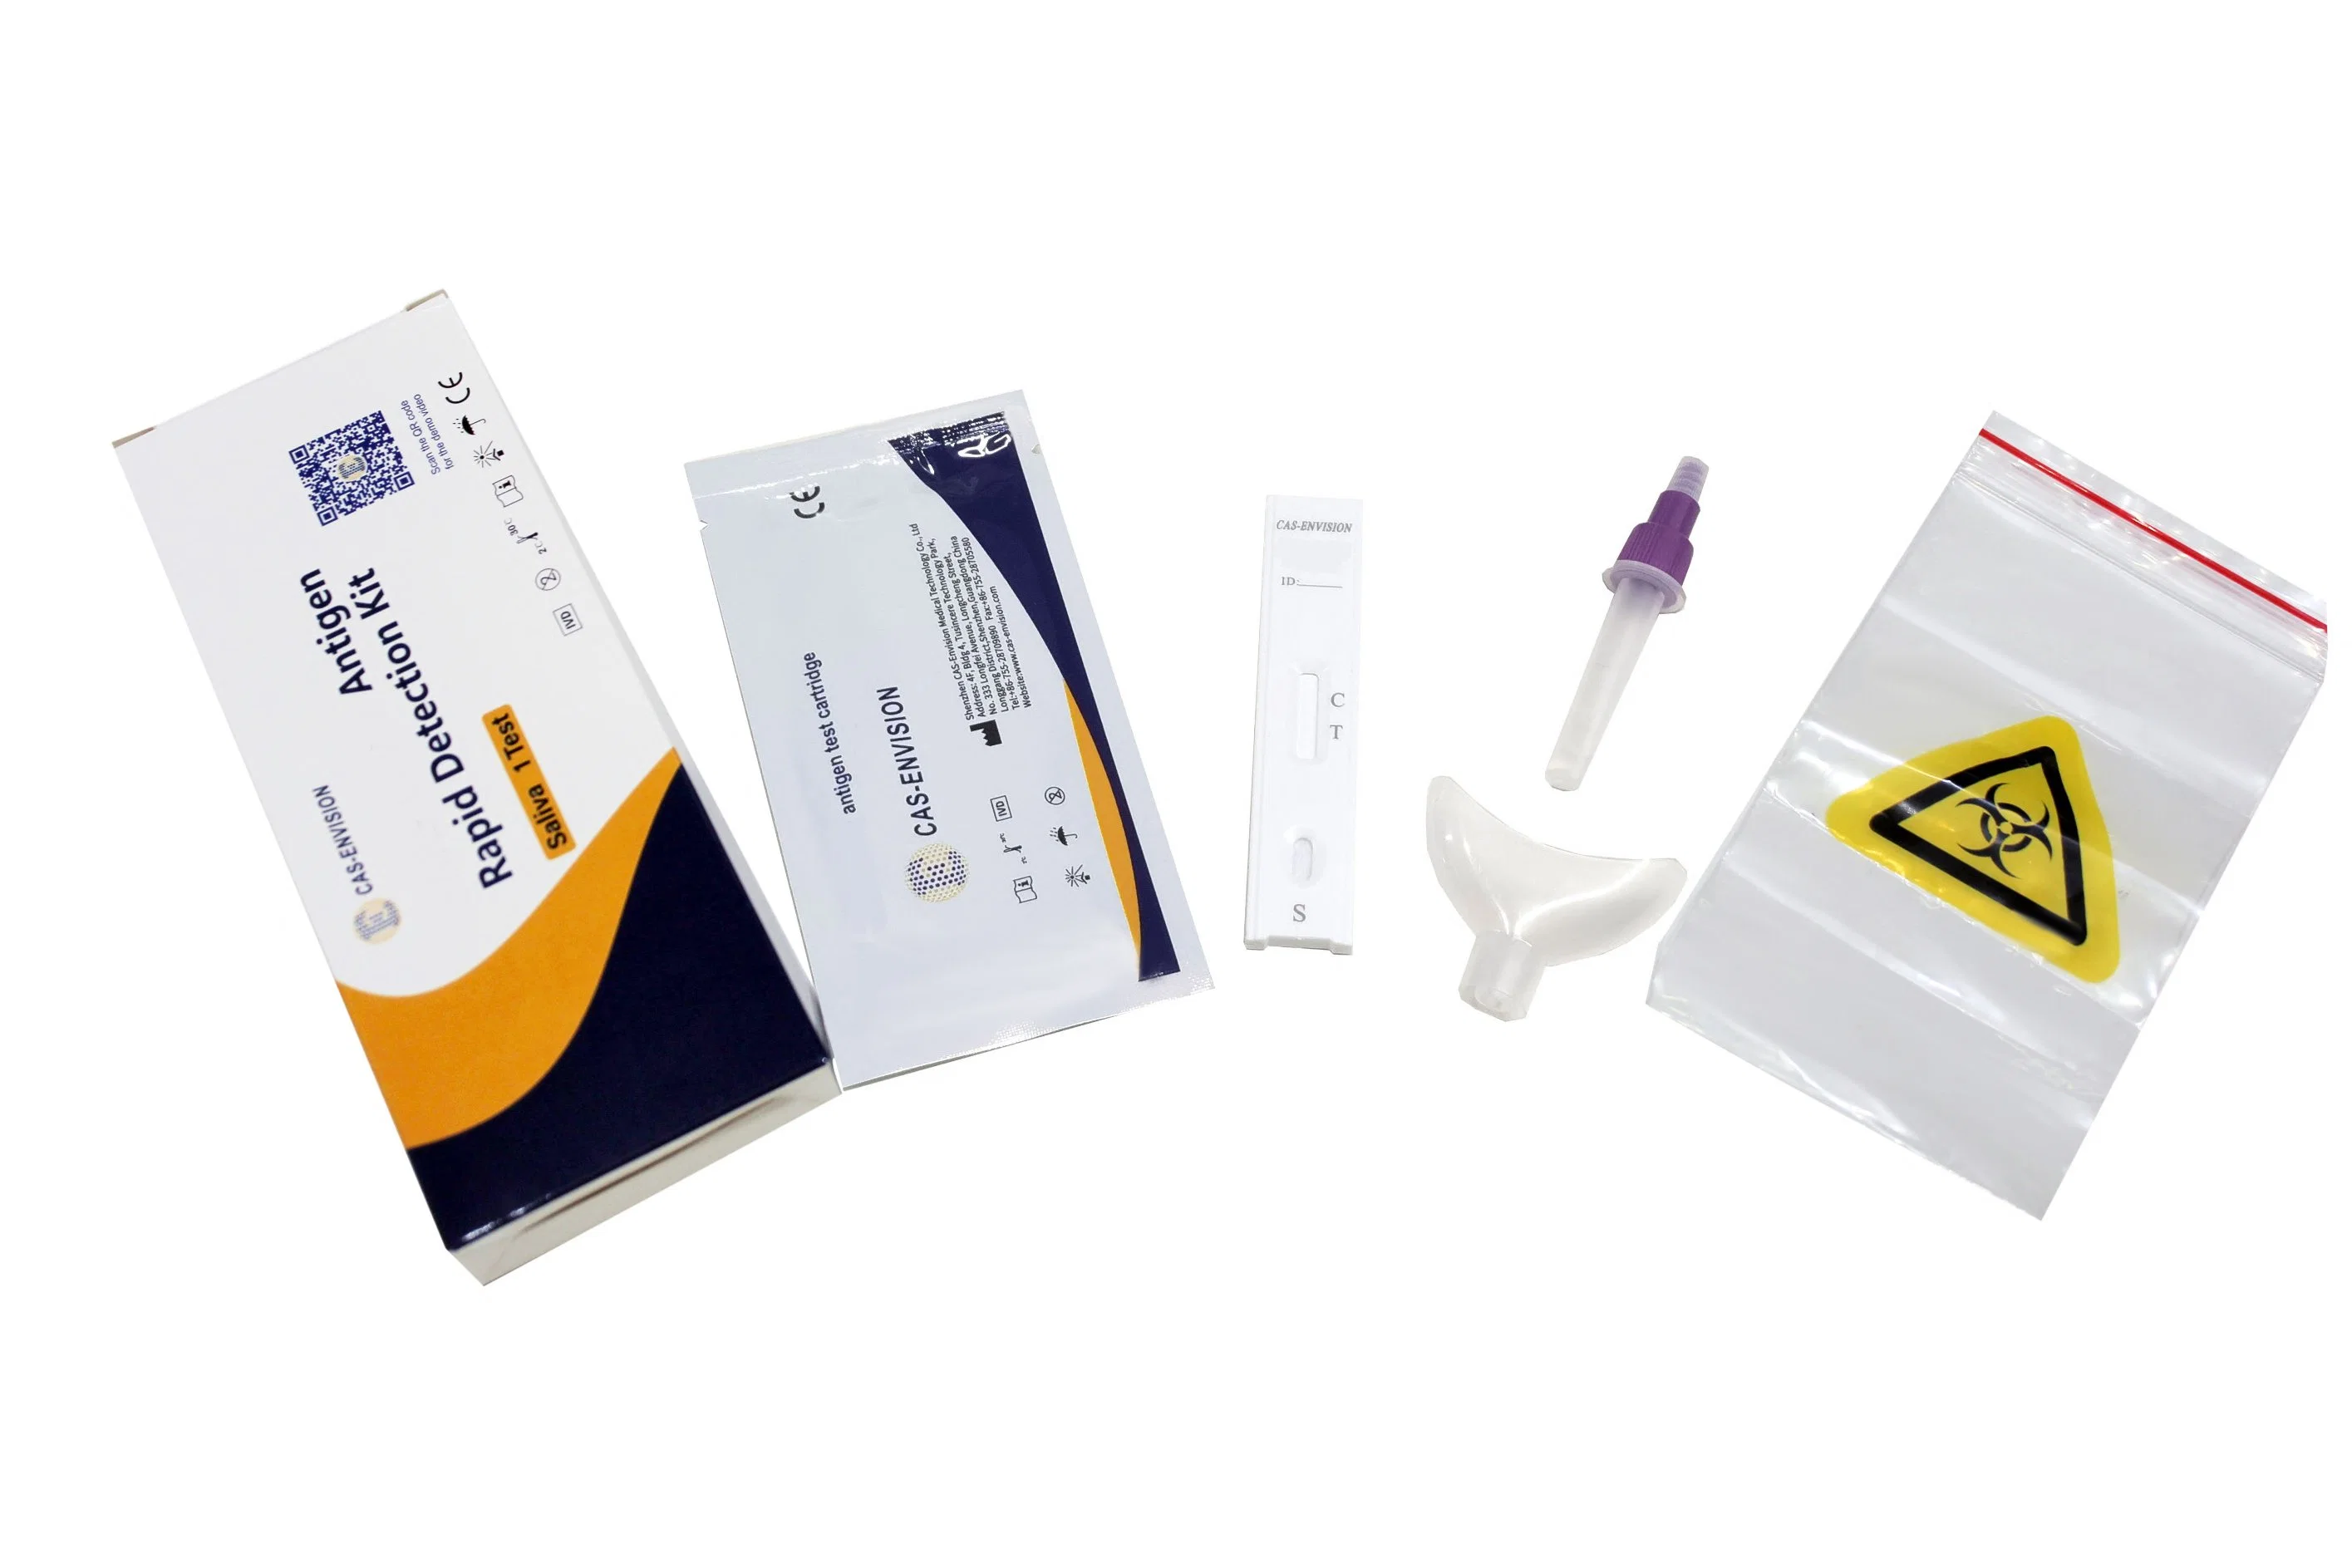 CAS Antigen Rapid Test Kit Lollipop Style Antigen Saliva Test Kit